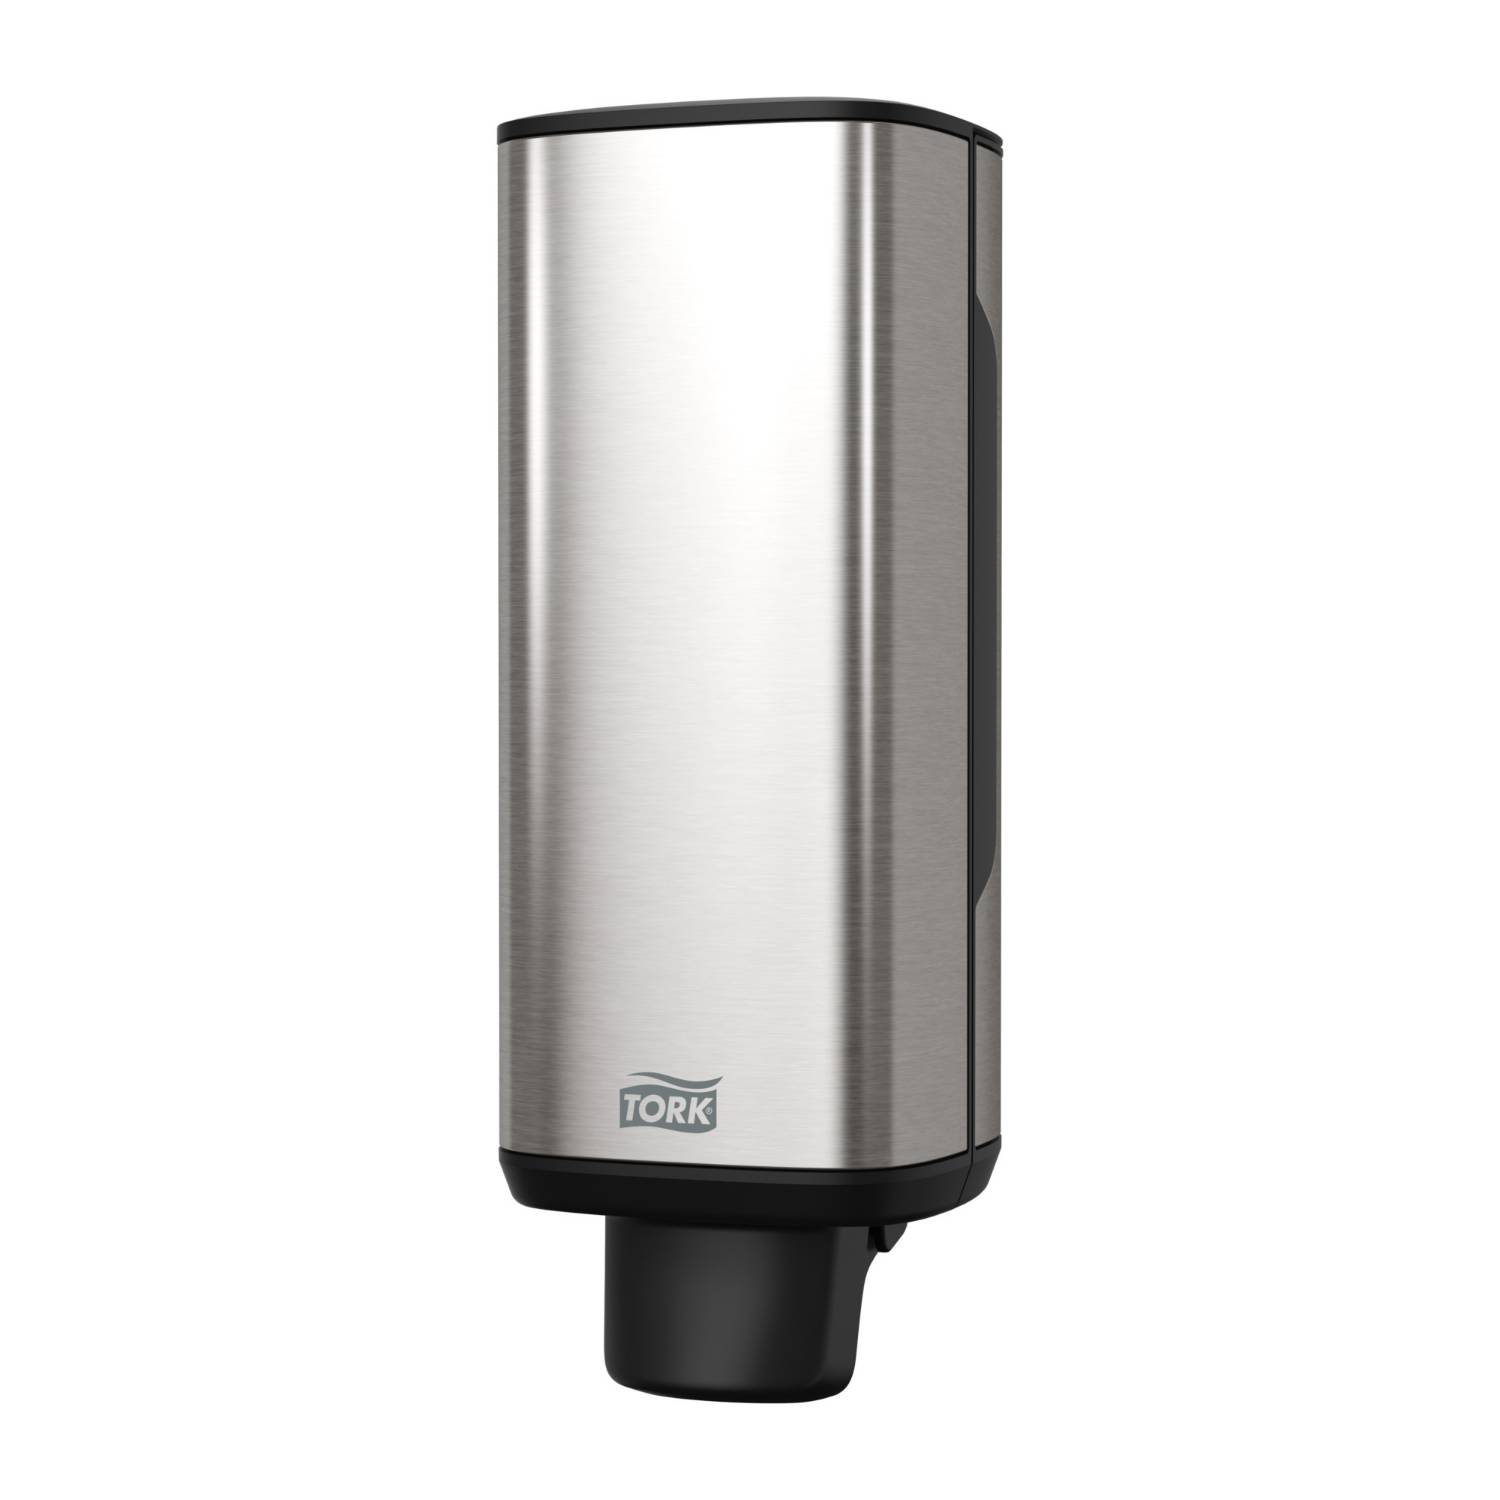 Tork Foam Skincare dispenser - manual dispenser Image design